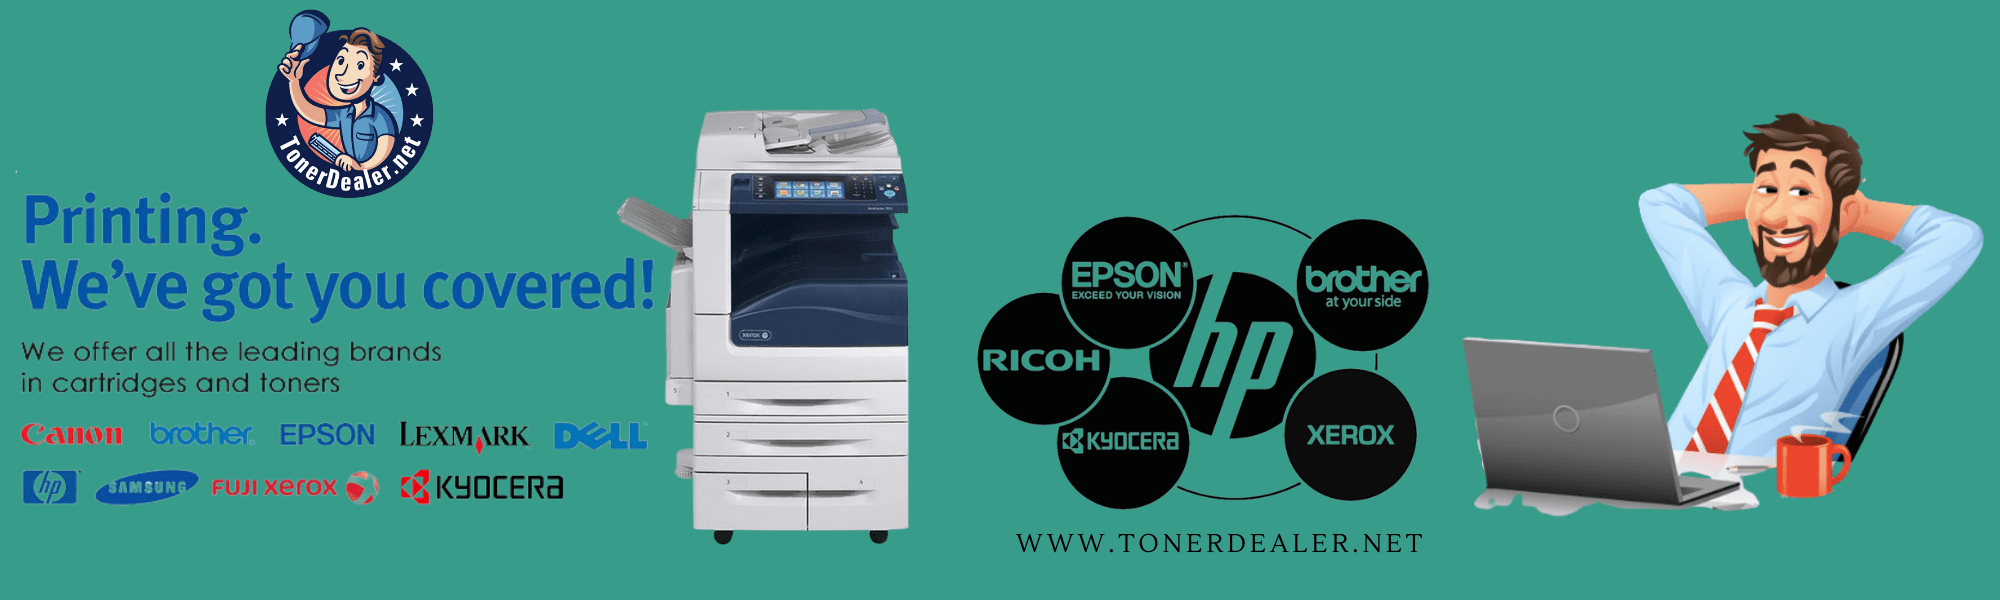 Printer huren of leasen01